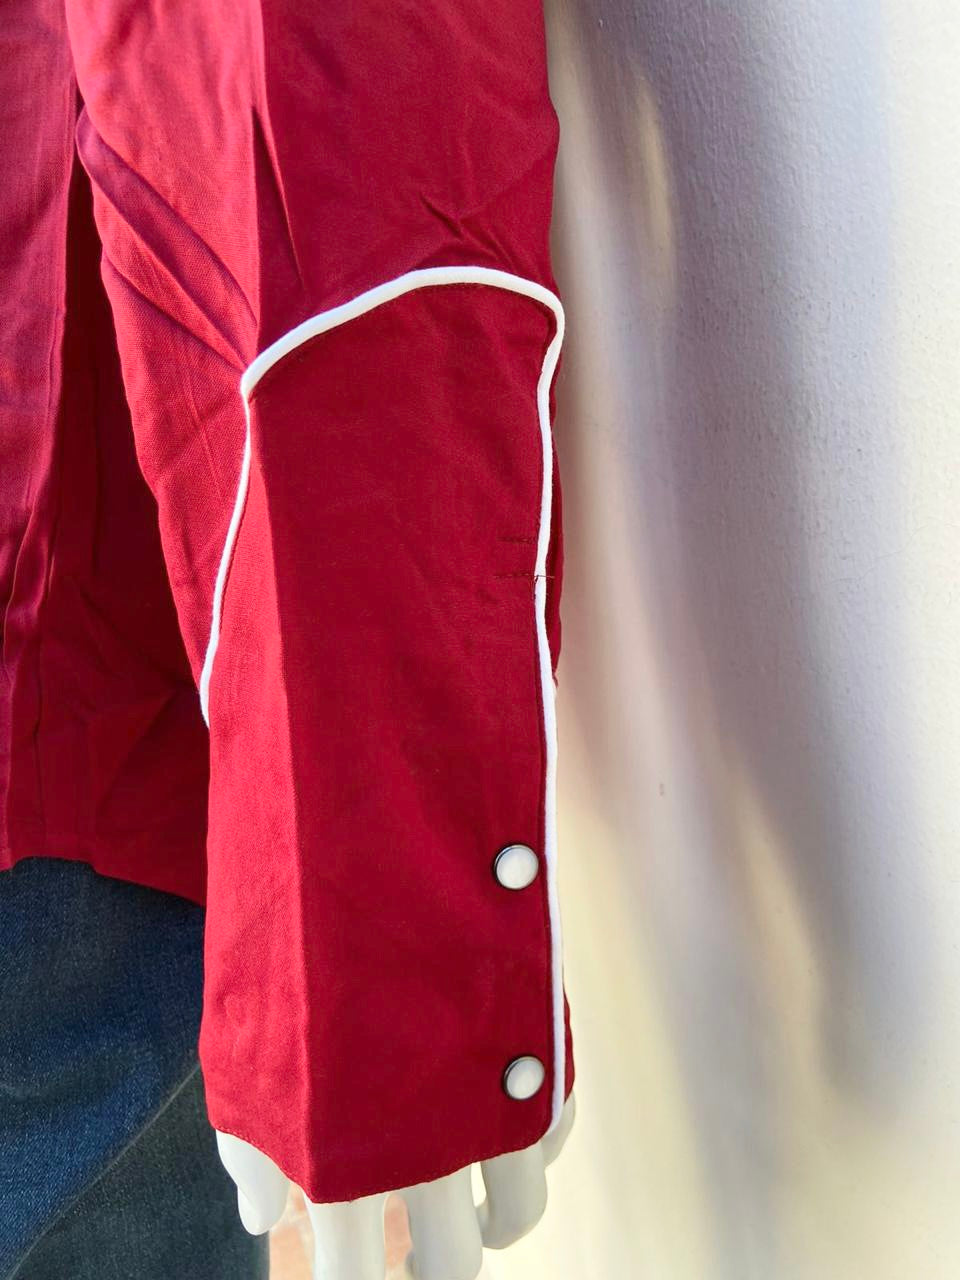 Camisa Fashion Nova original roja con diseños de pañuelos en color blanco YOKE LONG, manga larga.